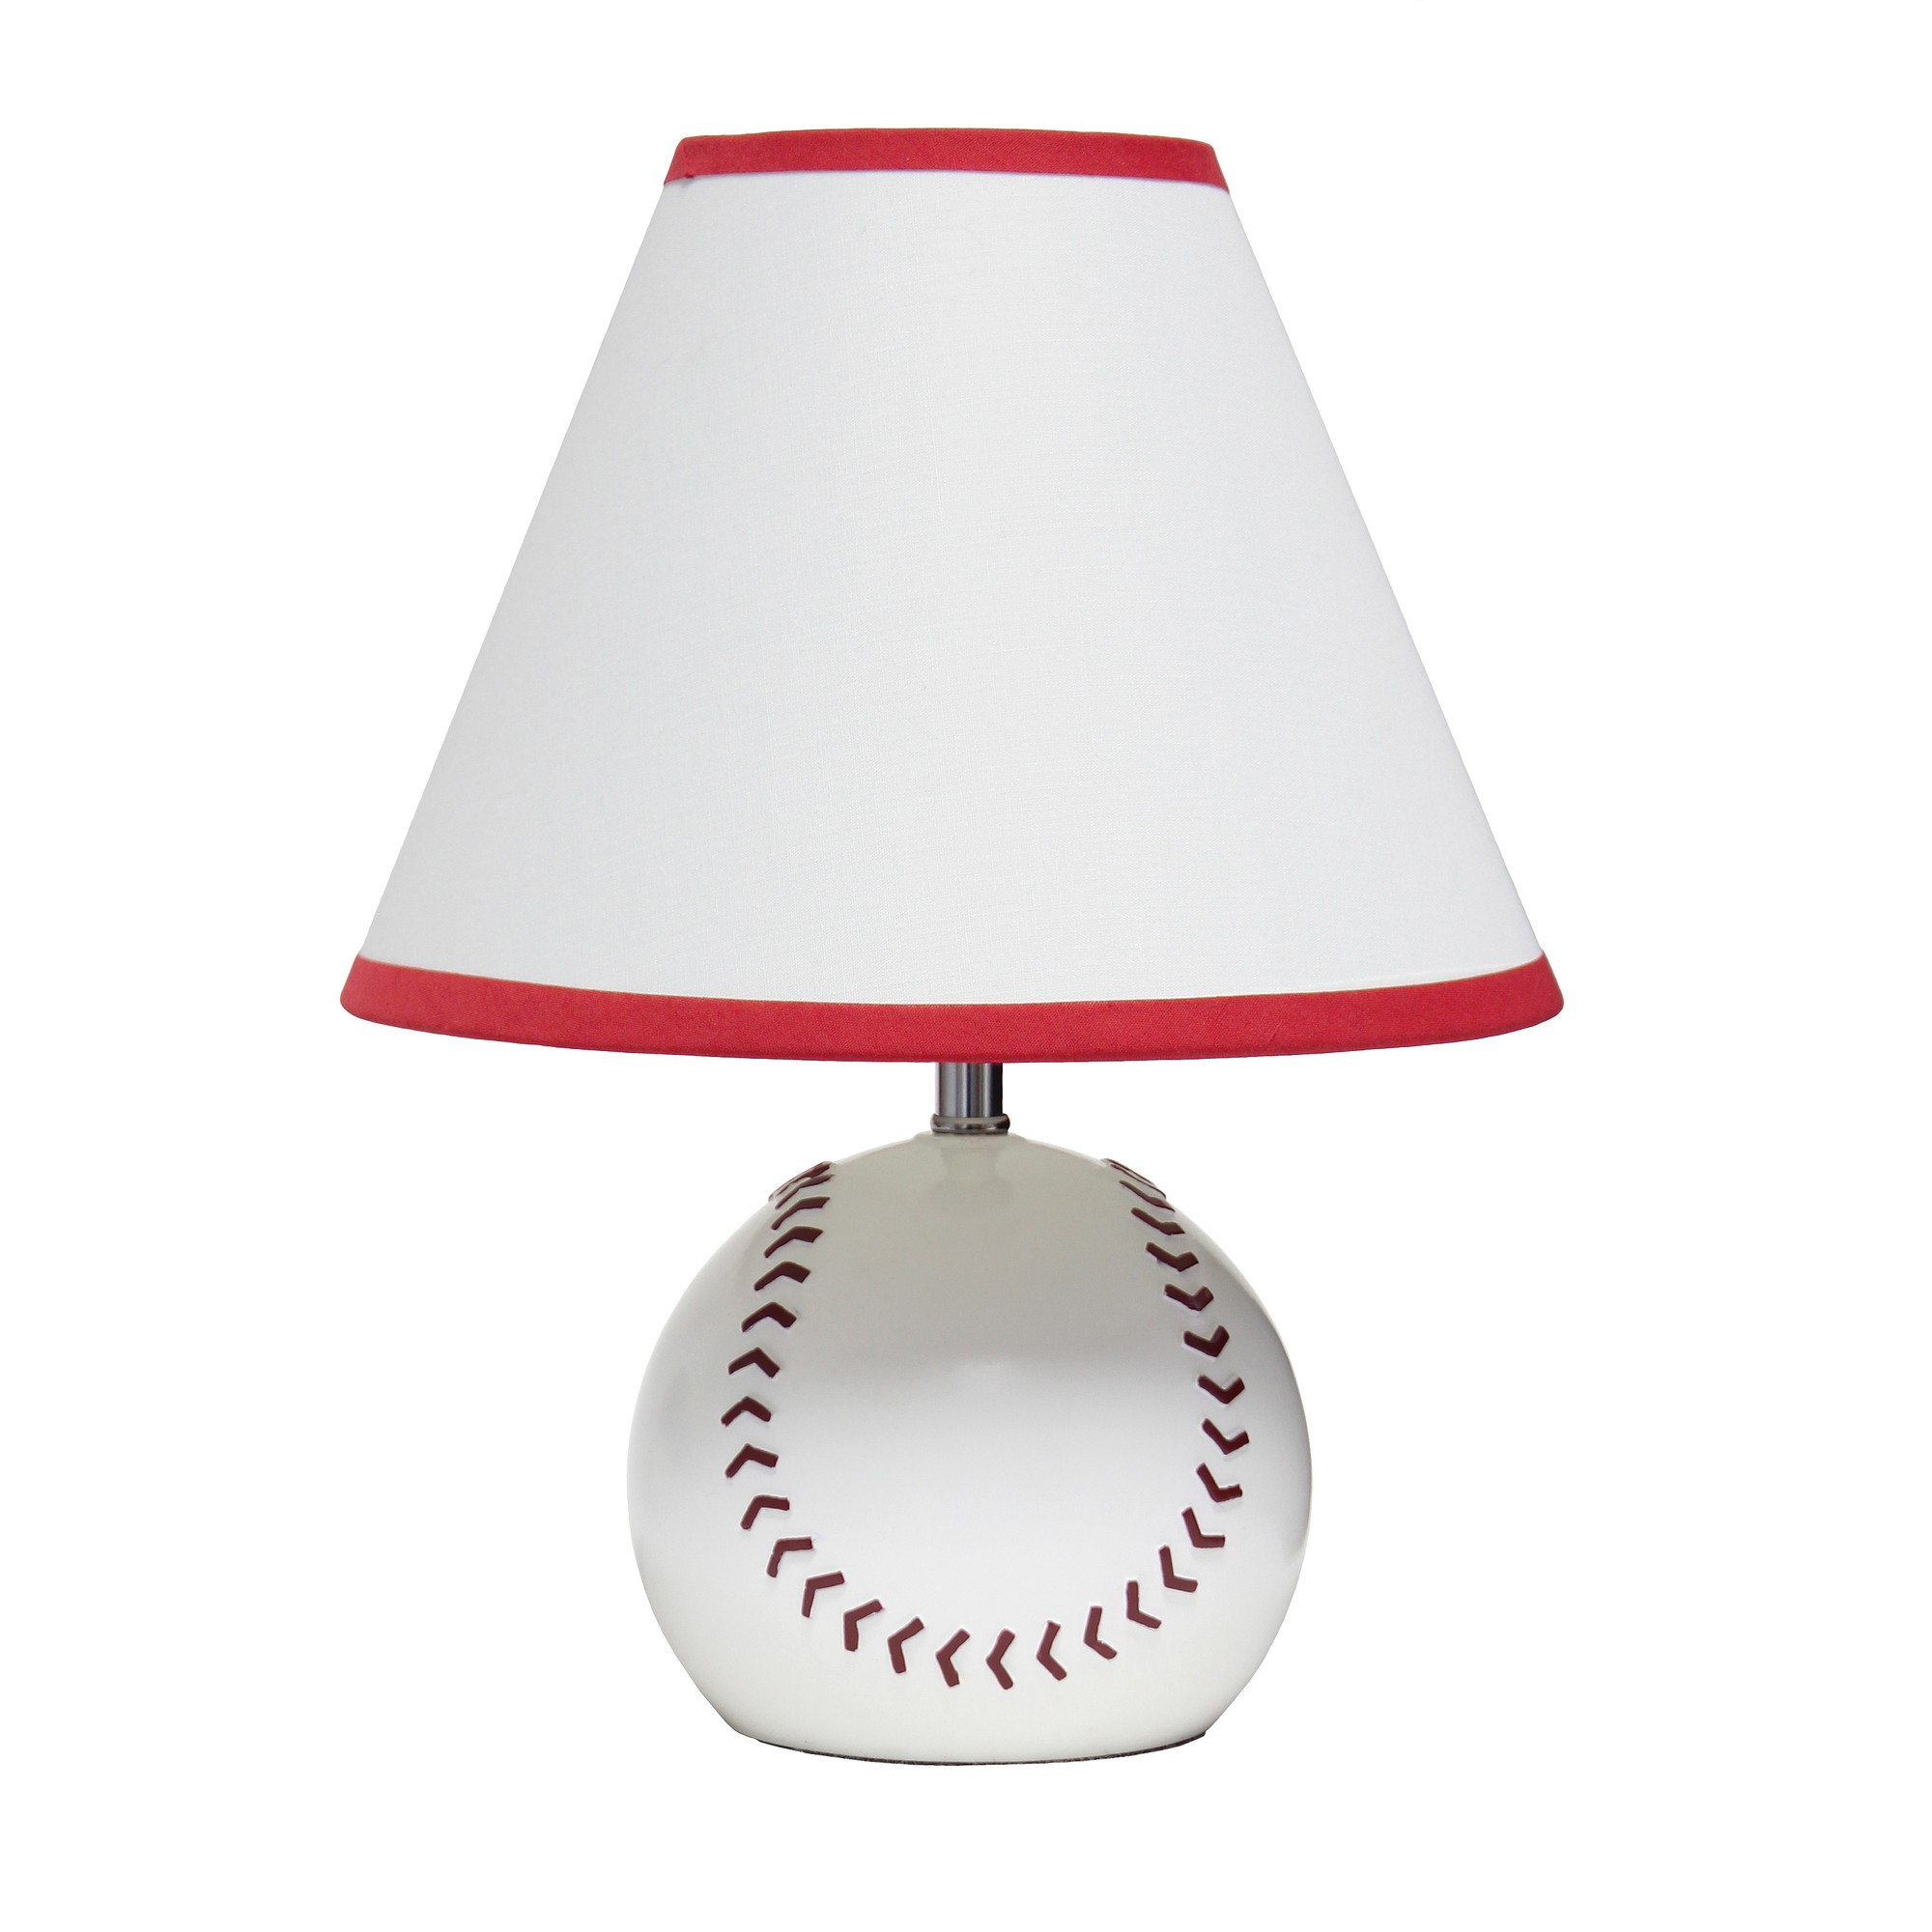 11.5" Tall Baseball Table Lamp with White Shade